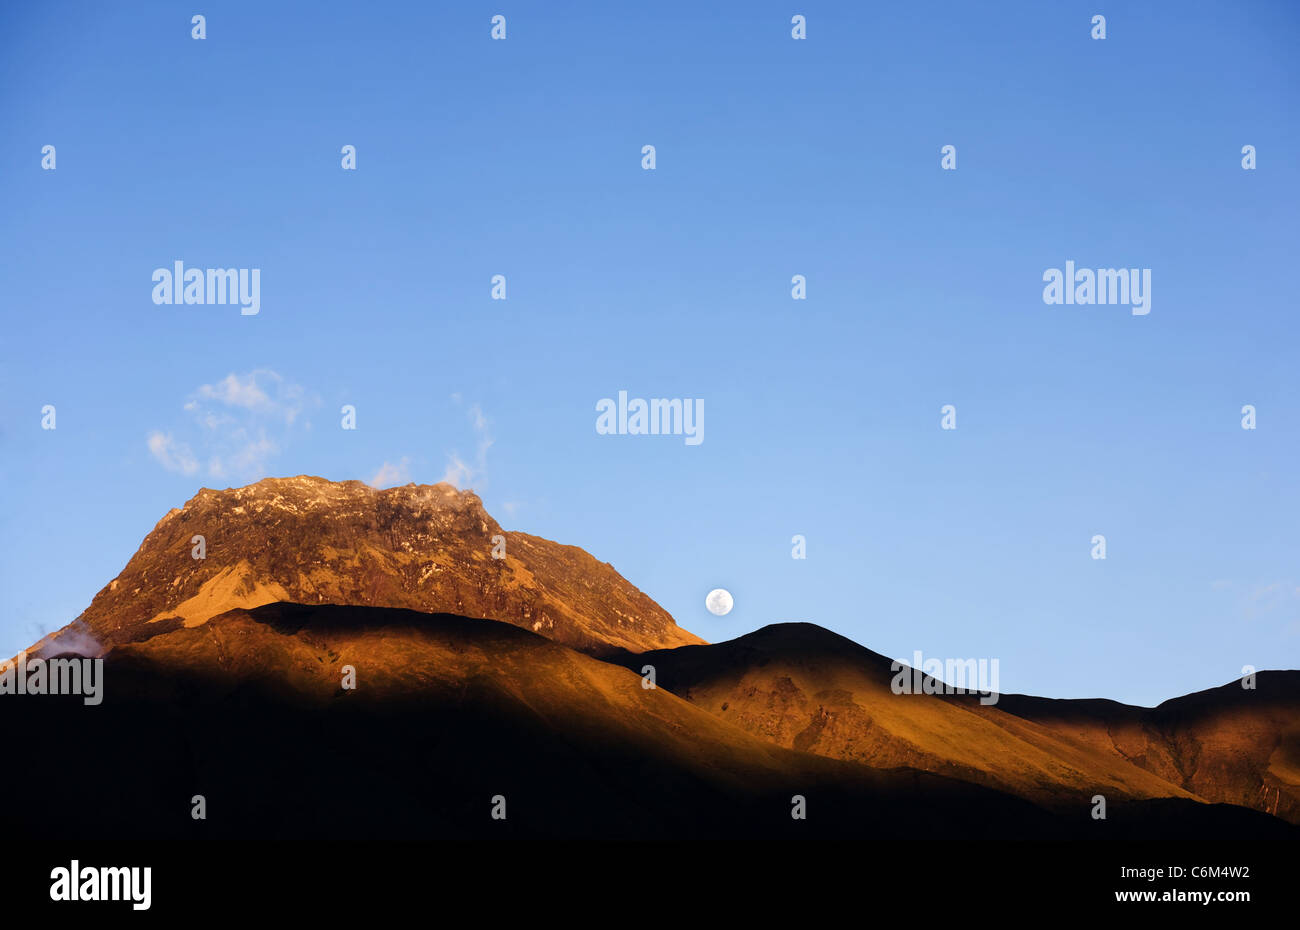 Inaktive Vulkan Imbabura und Sonnenuntergang mit Mond in Ecuador Stockfoto